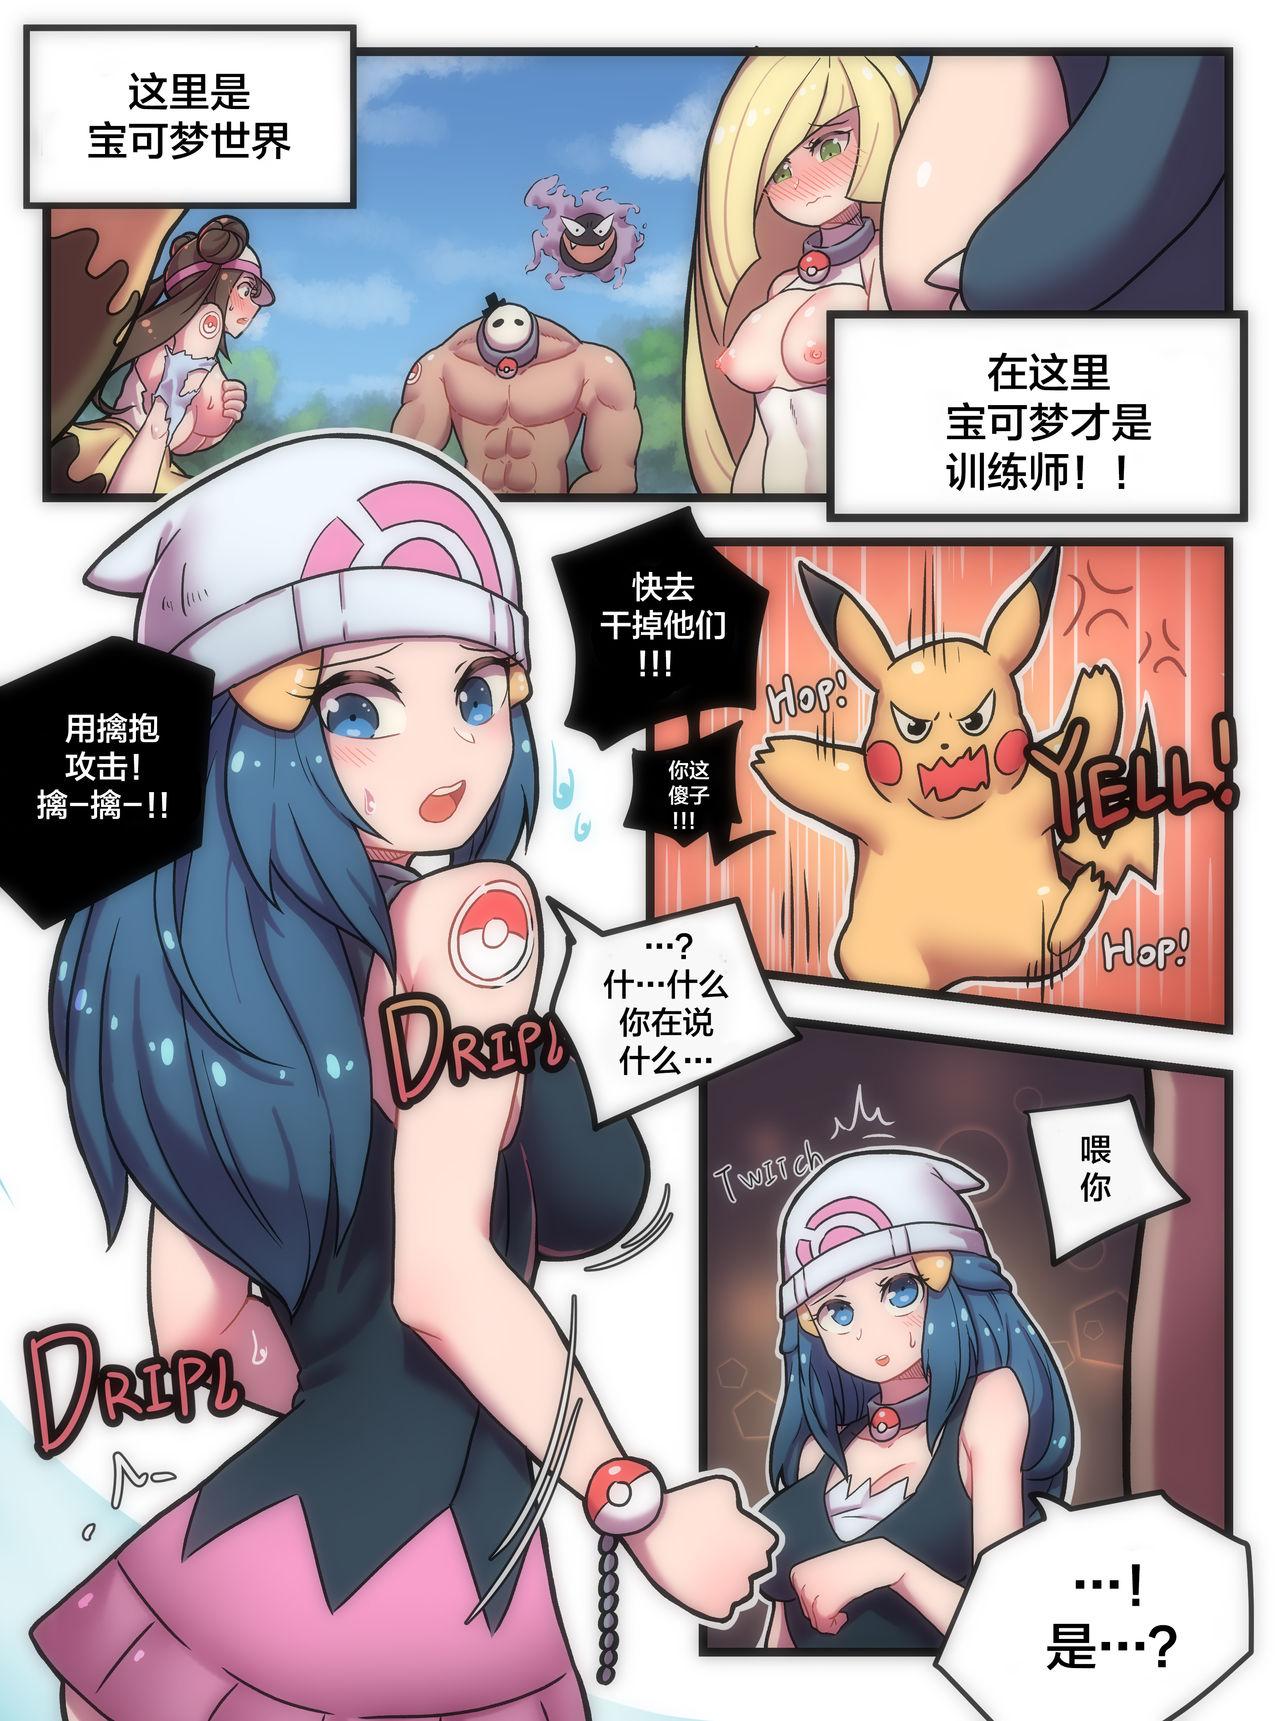 Solo Girl Pokemon World! - Pokemon | pocket monsters Hiddencam - Page 2